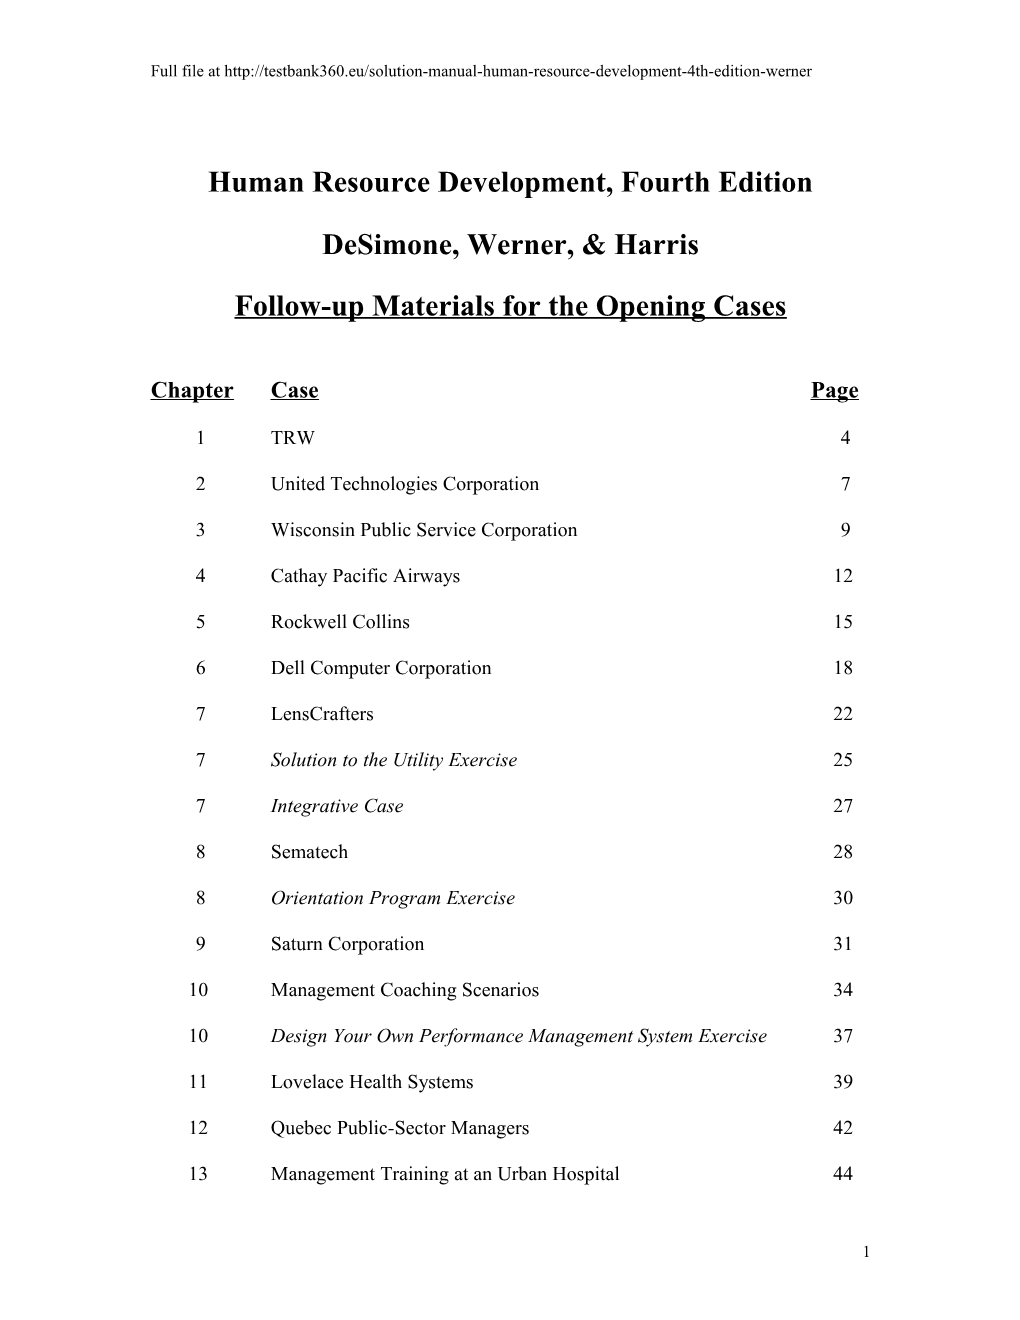 Human Resource Development, Fourth Edition